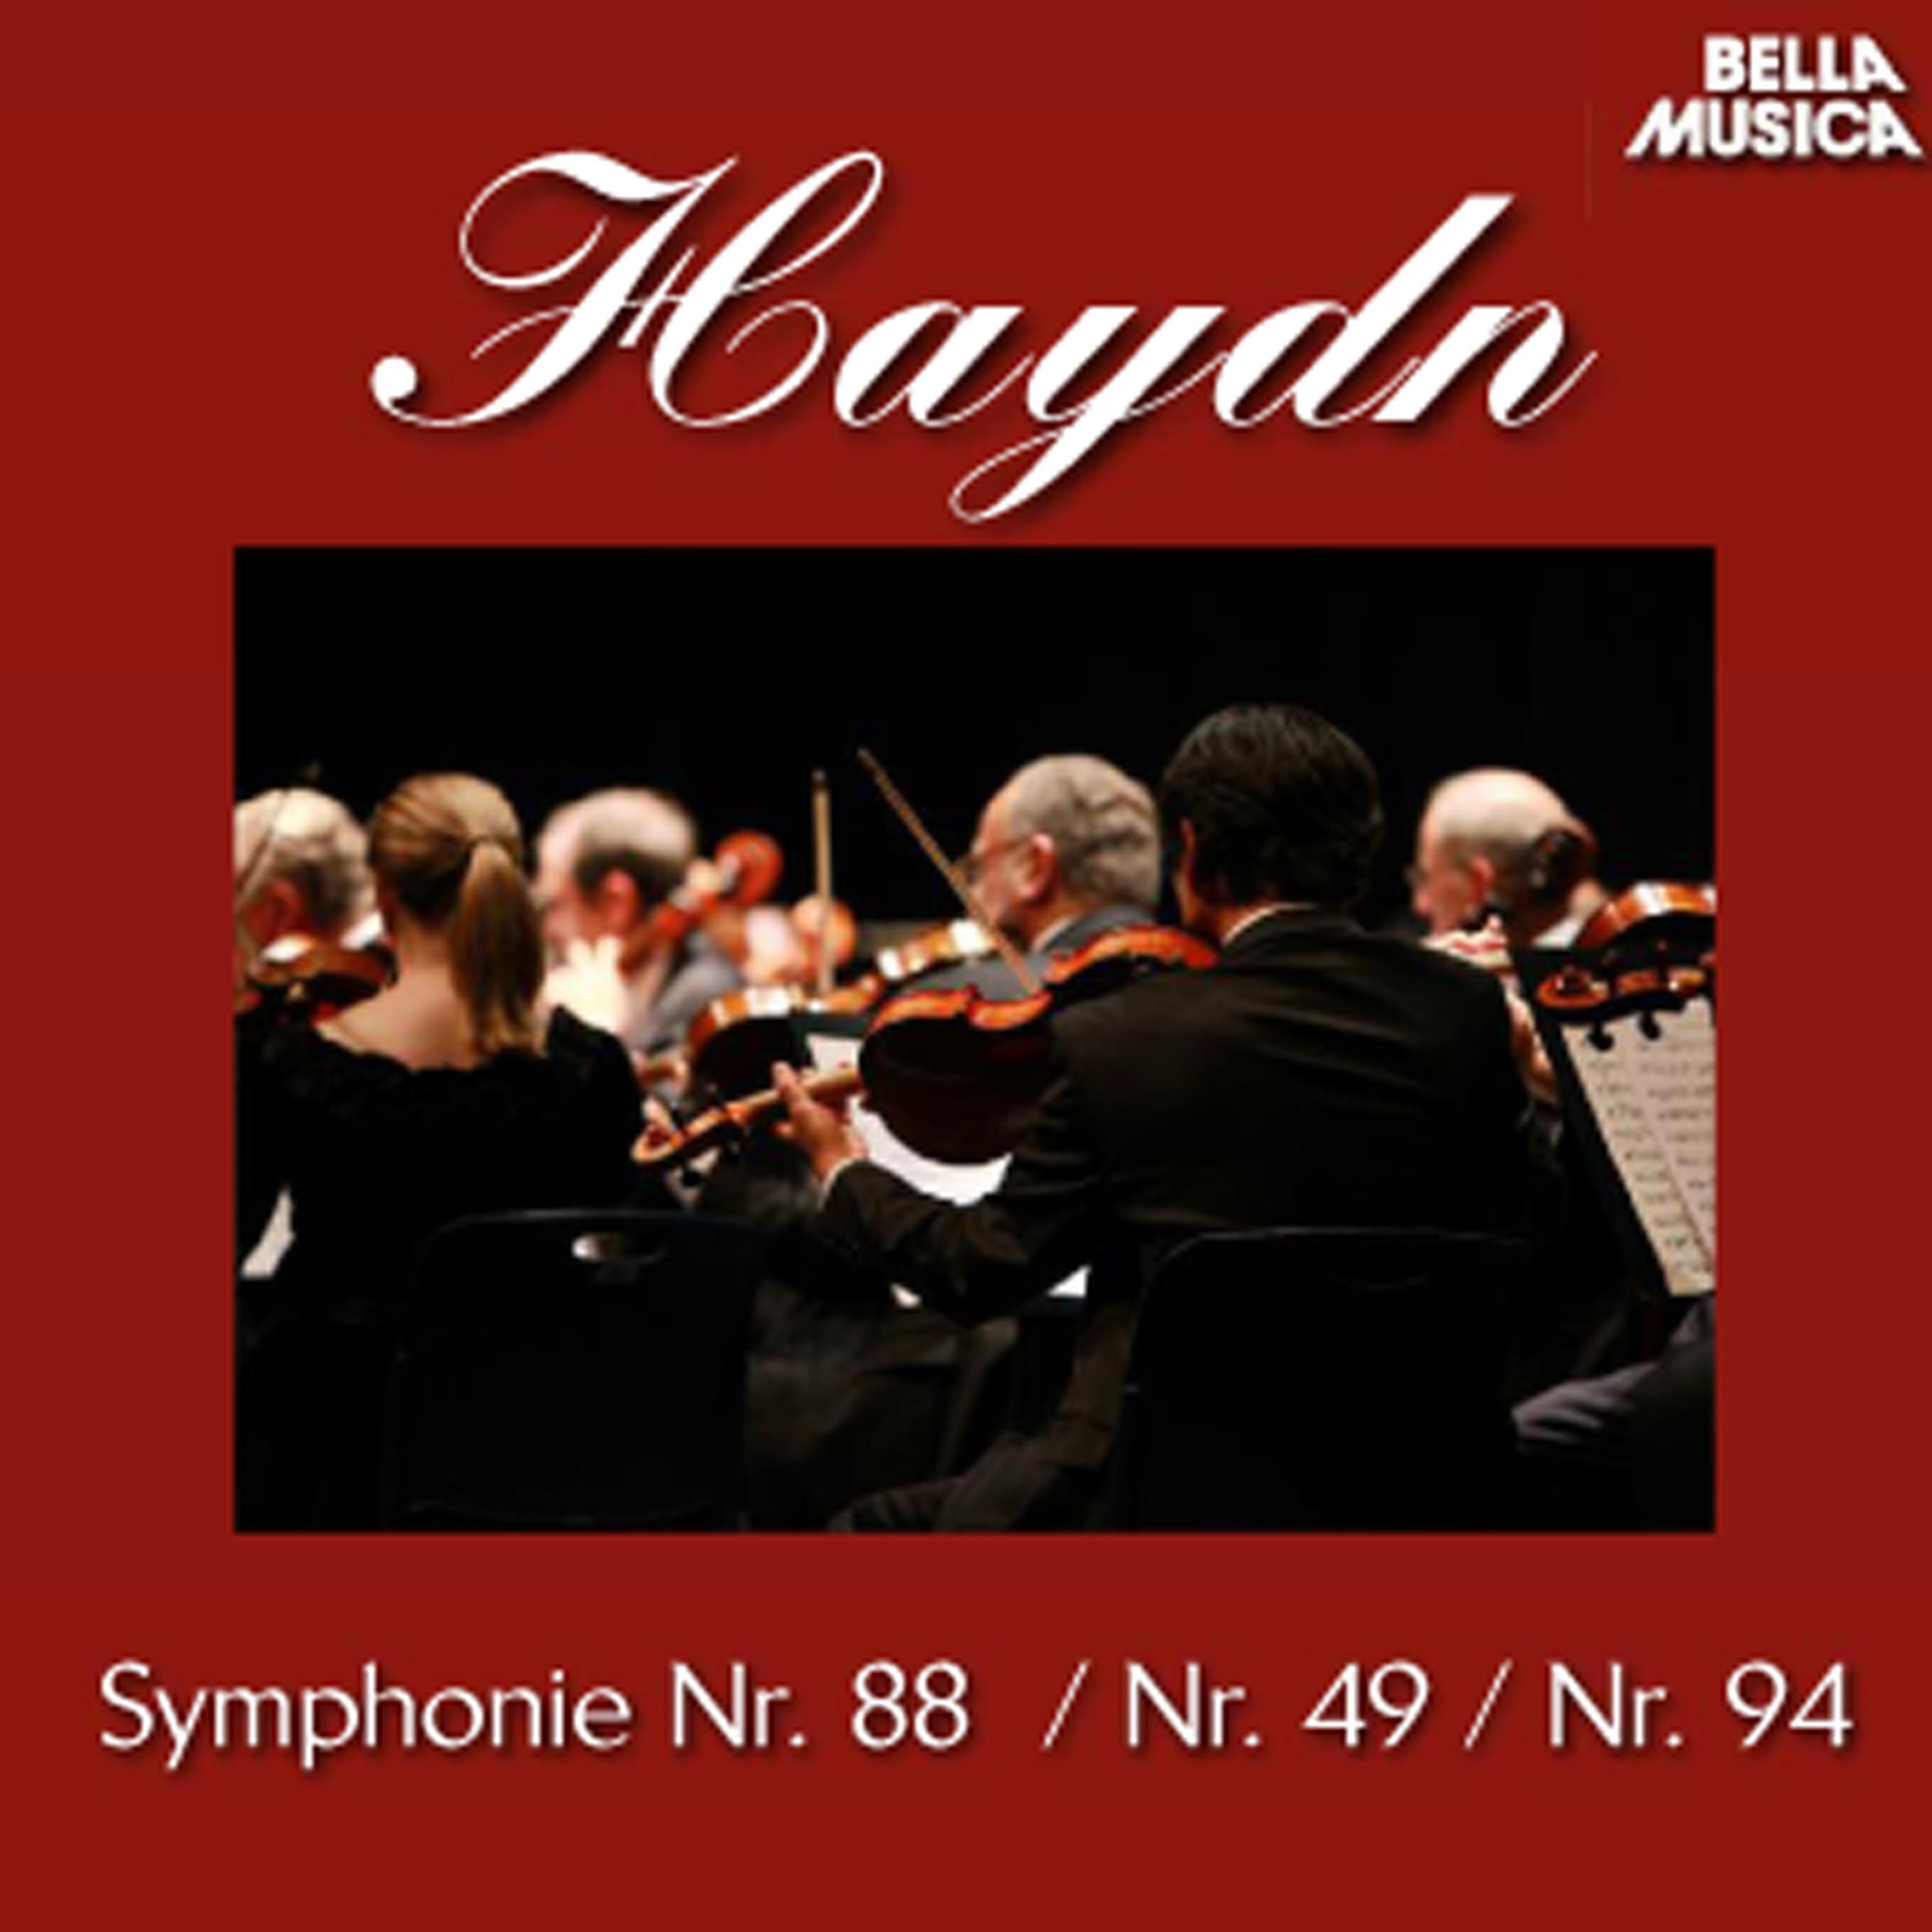 Sinfonie No. 88 fü r Orchester in G Major: IV. Finale  Allegro con spirito